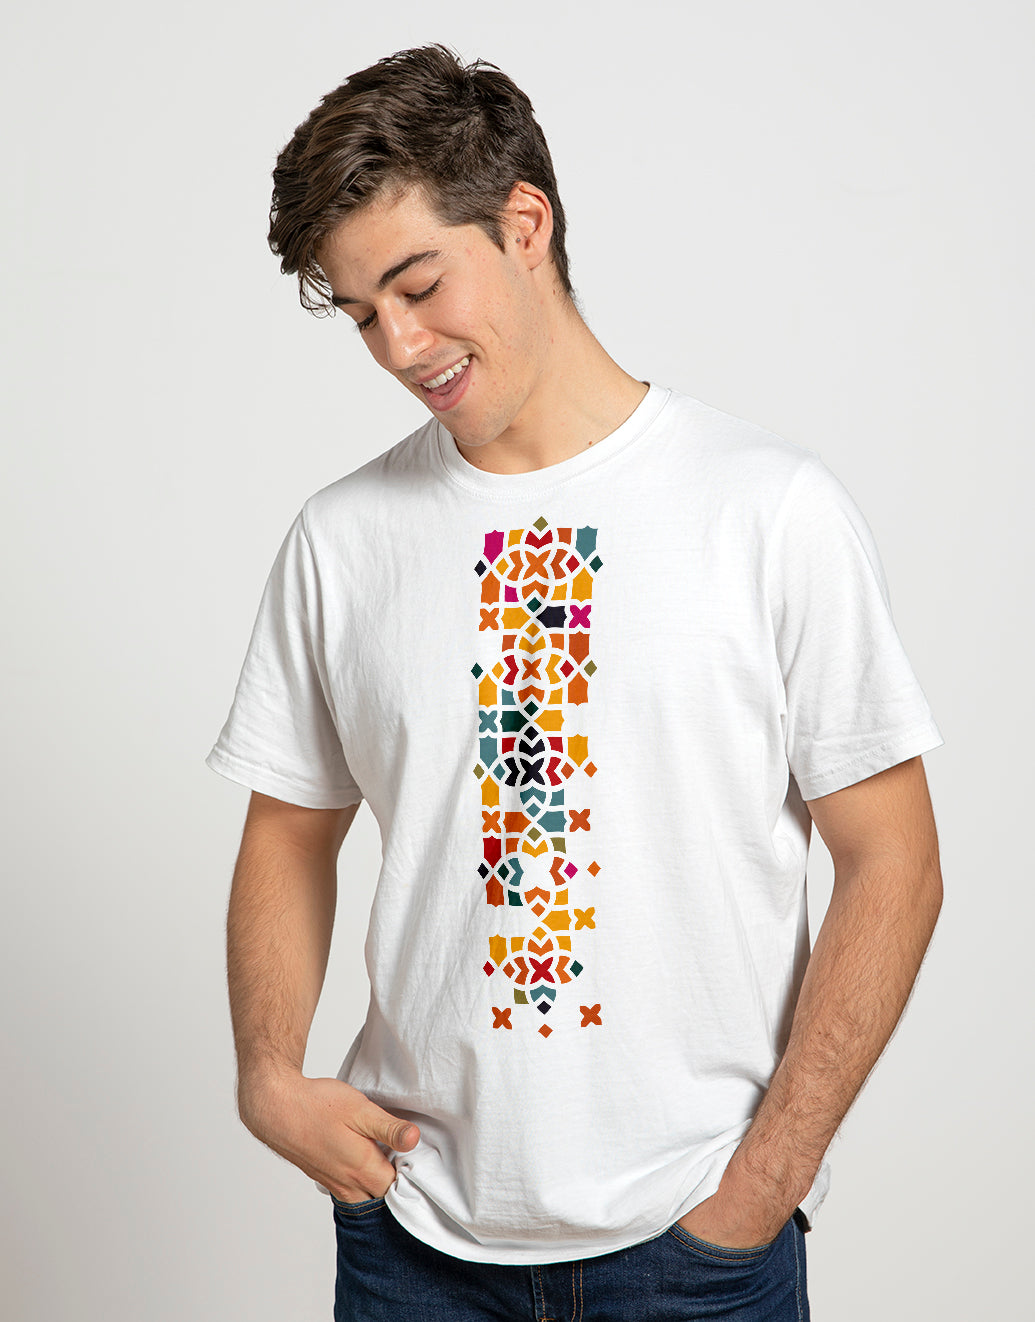 T-shirt for Men (Ramadan Decoration)